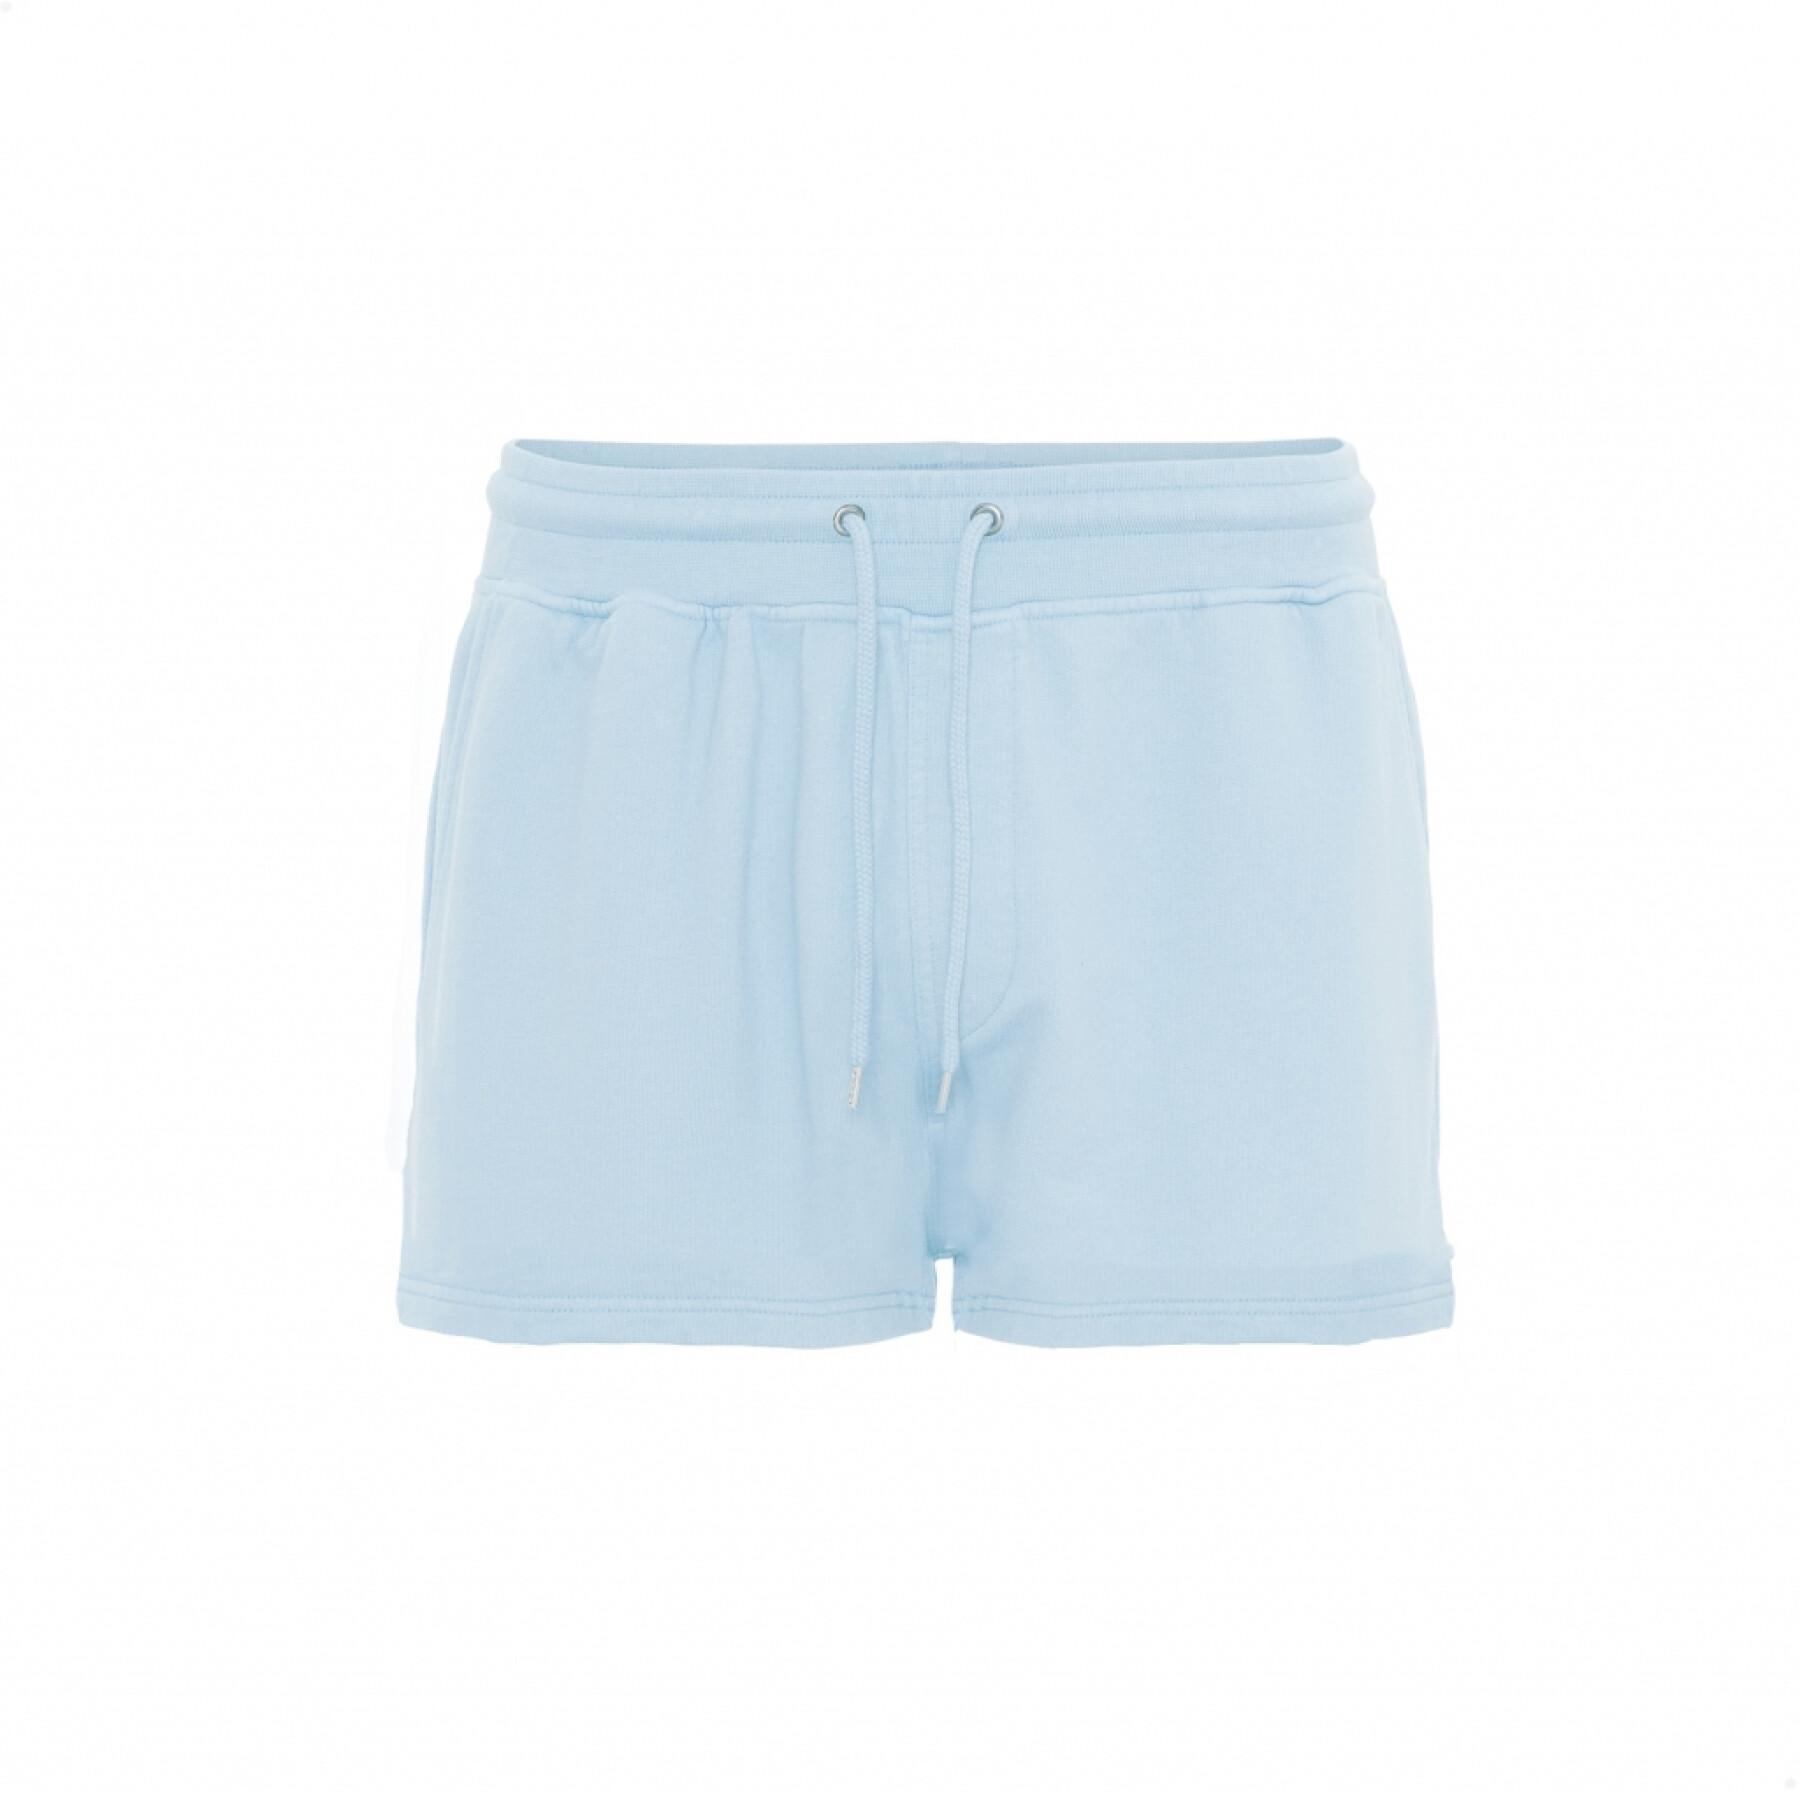 Pantalón corto de mujer Colorful Standard Organic polar blue